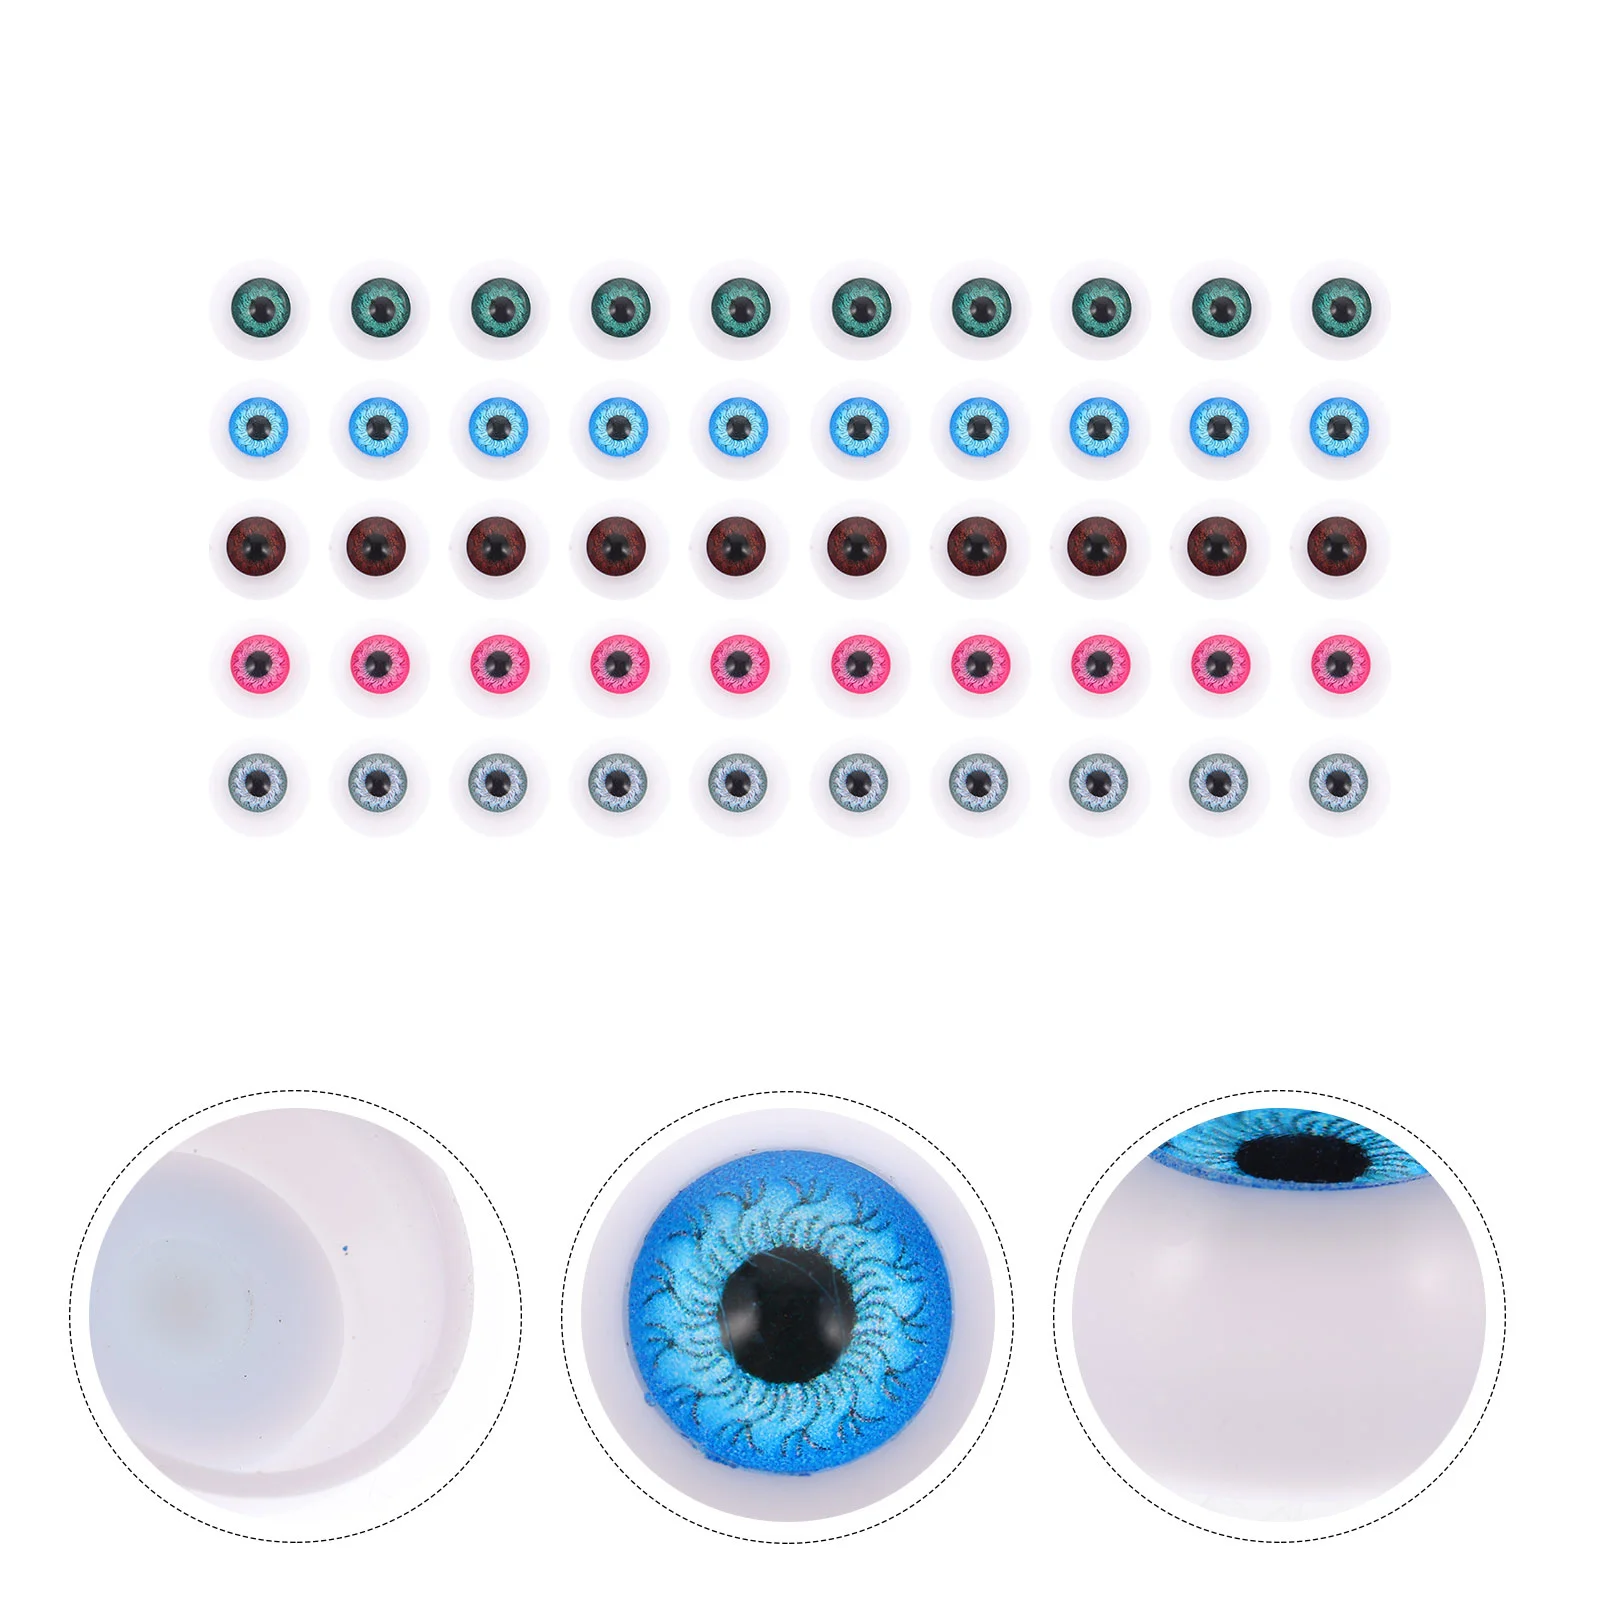 50 Pcs Decor Artificial Eyes Acrylic Eyes Realistic Three-dimensional DIY Crafts Acrylic Supplies for